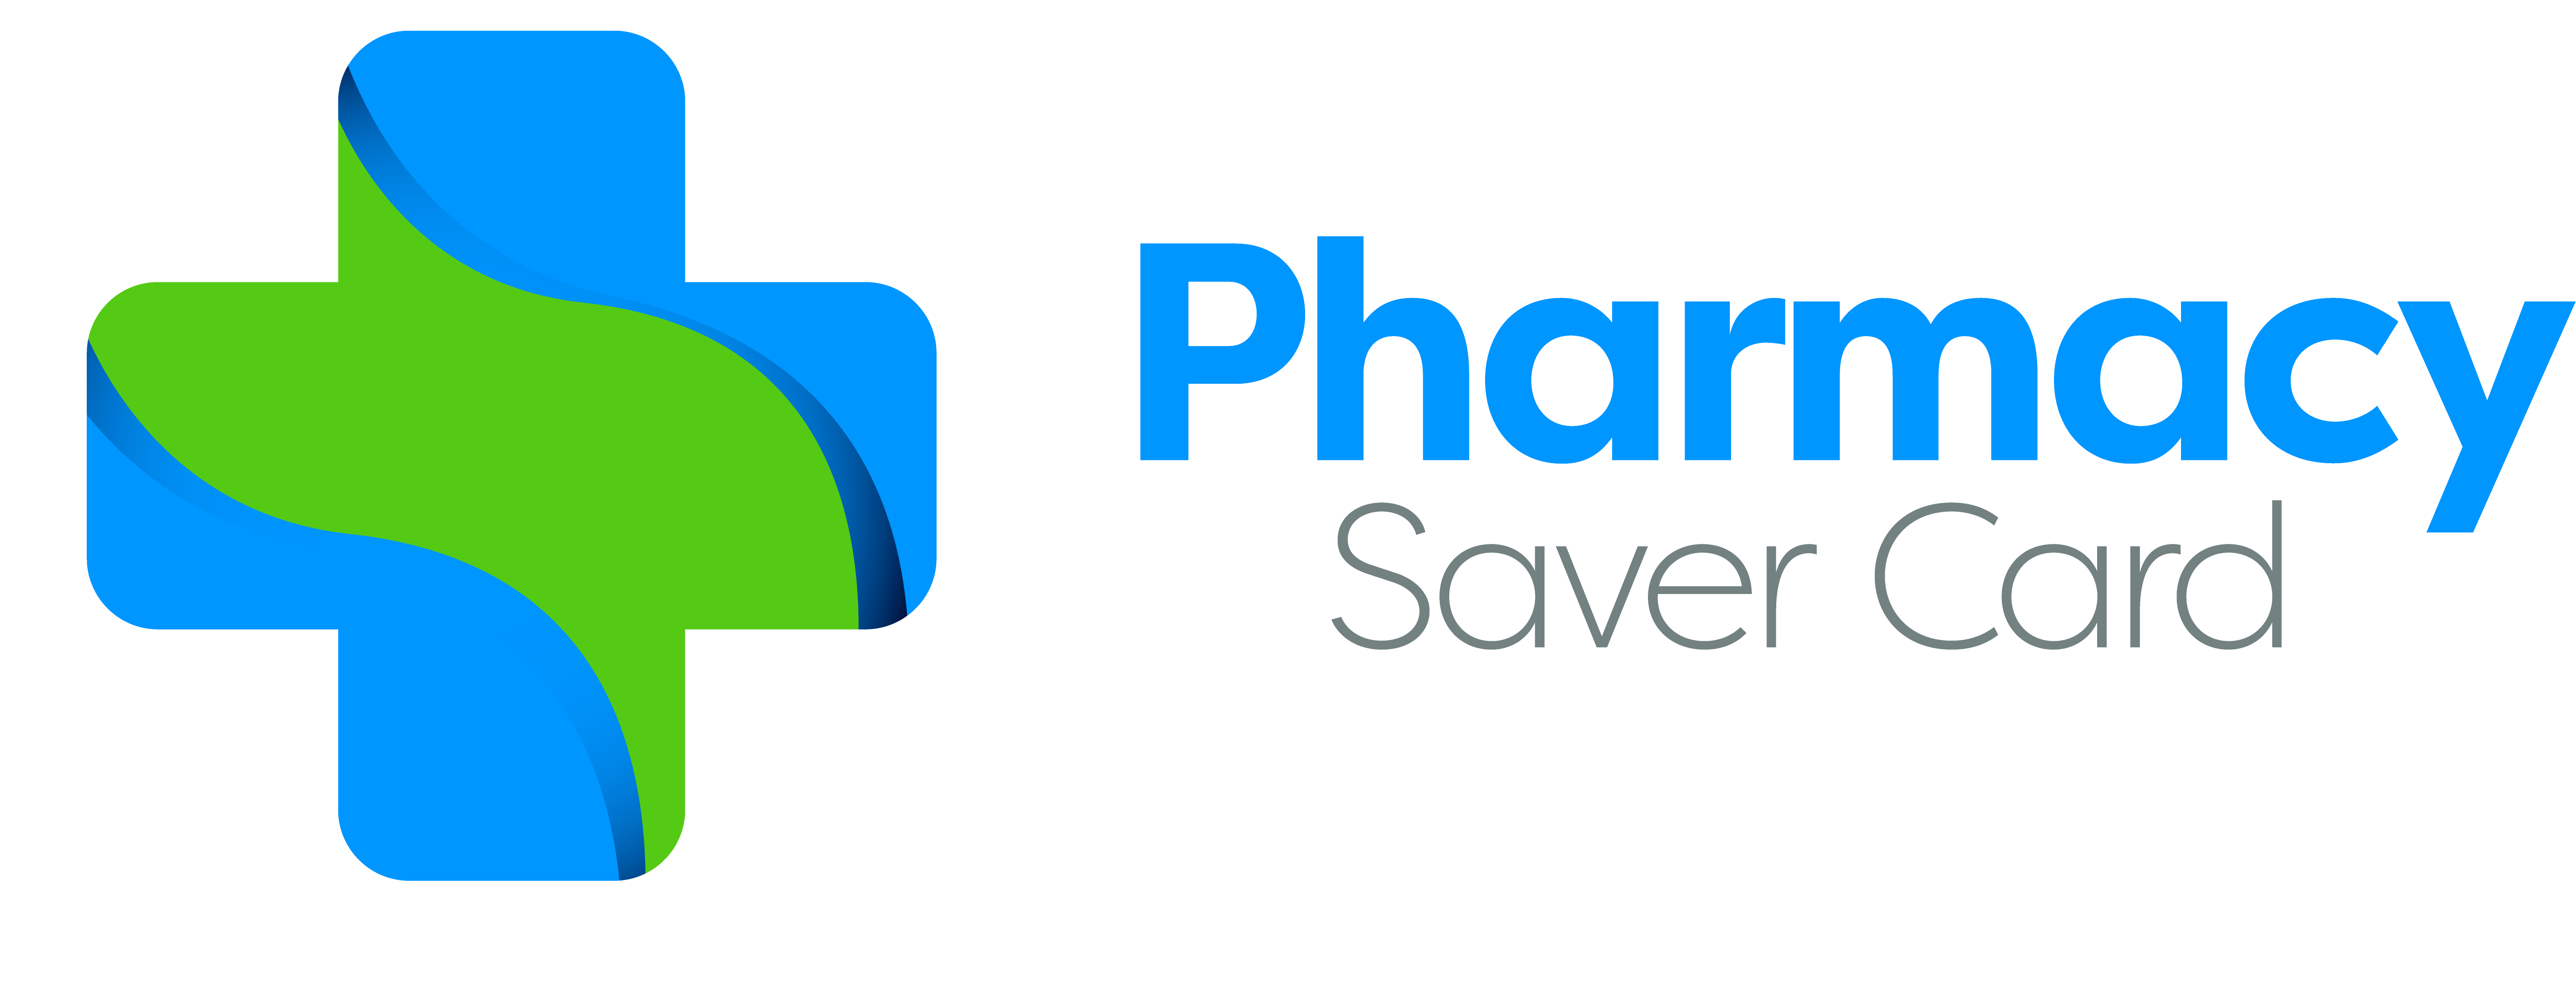 Pharmacy Saver Card